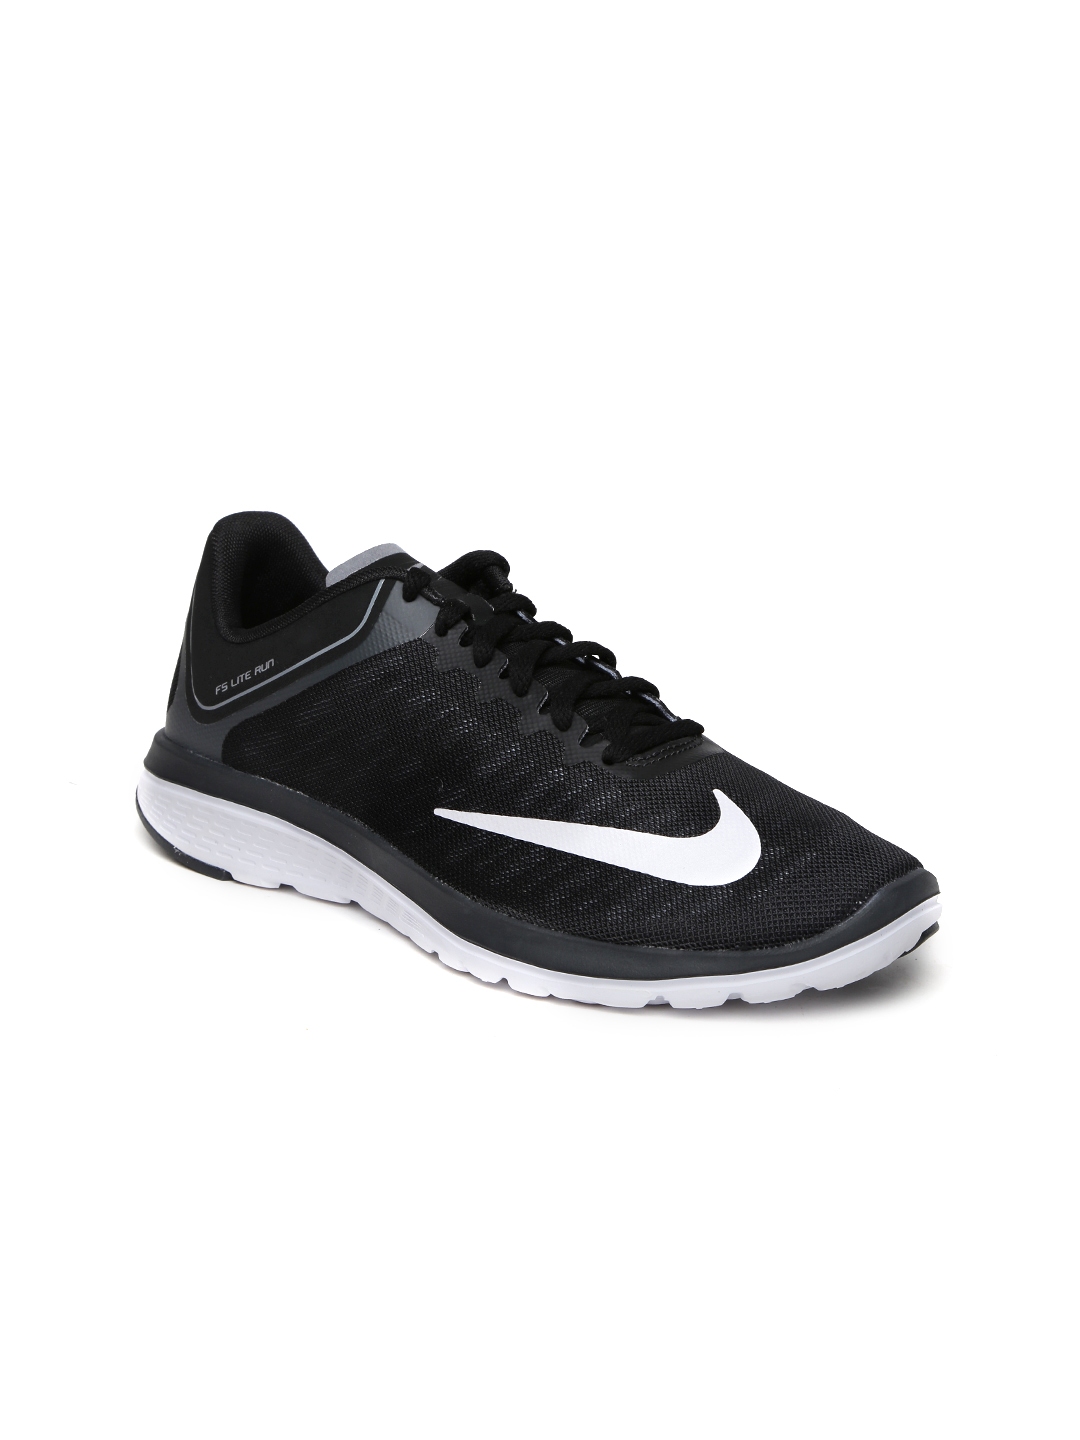 Buy Nike Women Black FS Lite Run 4 Running Shoes - for Women 1719423 | Myntra